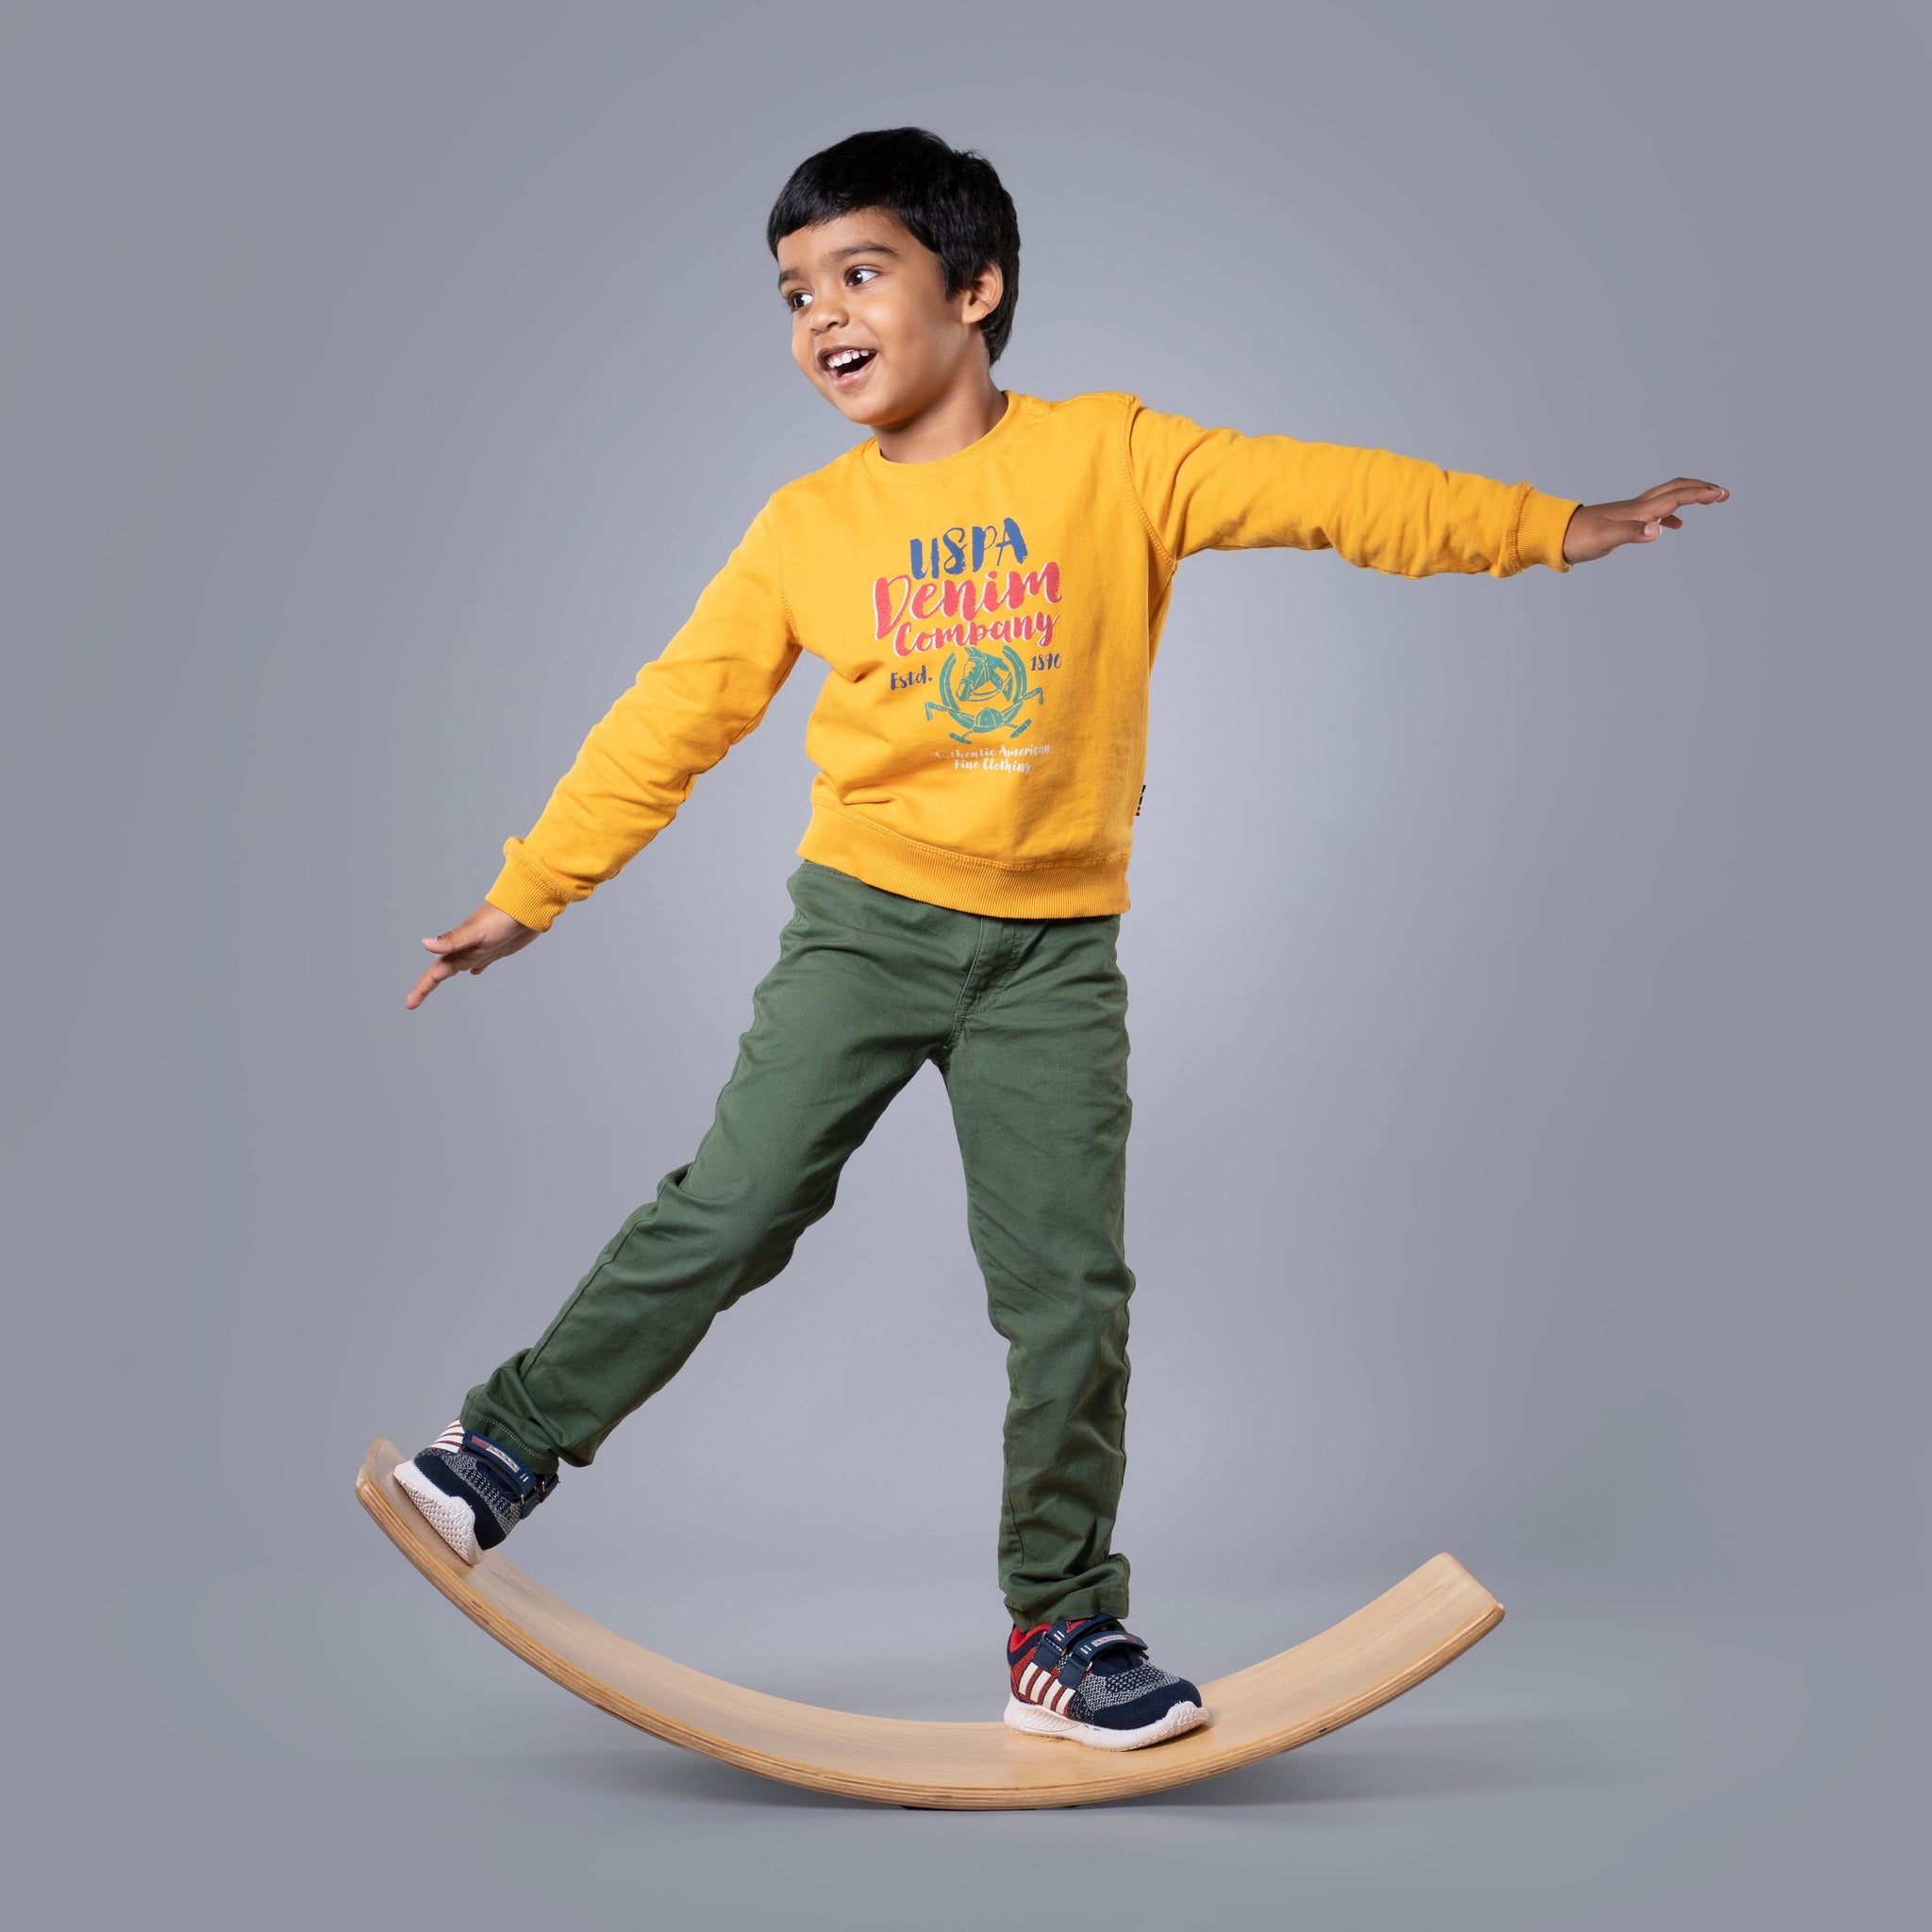 Eco-friendly Wobble Board Toy